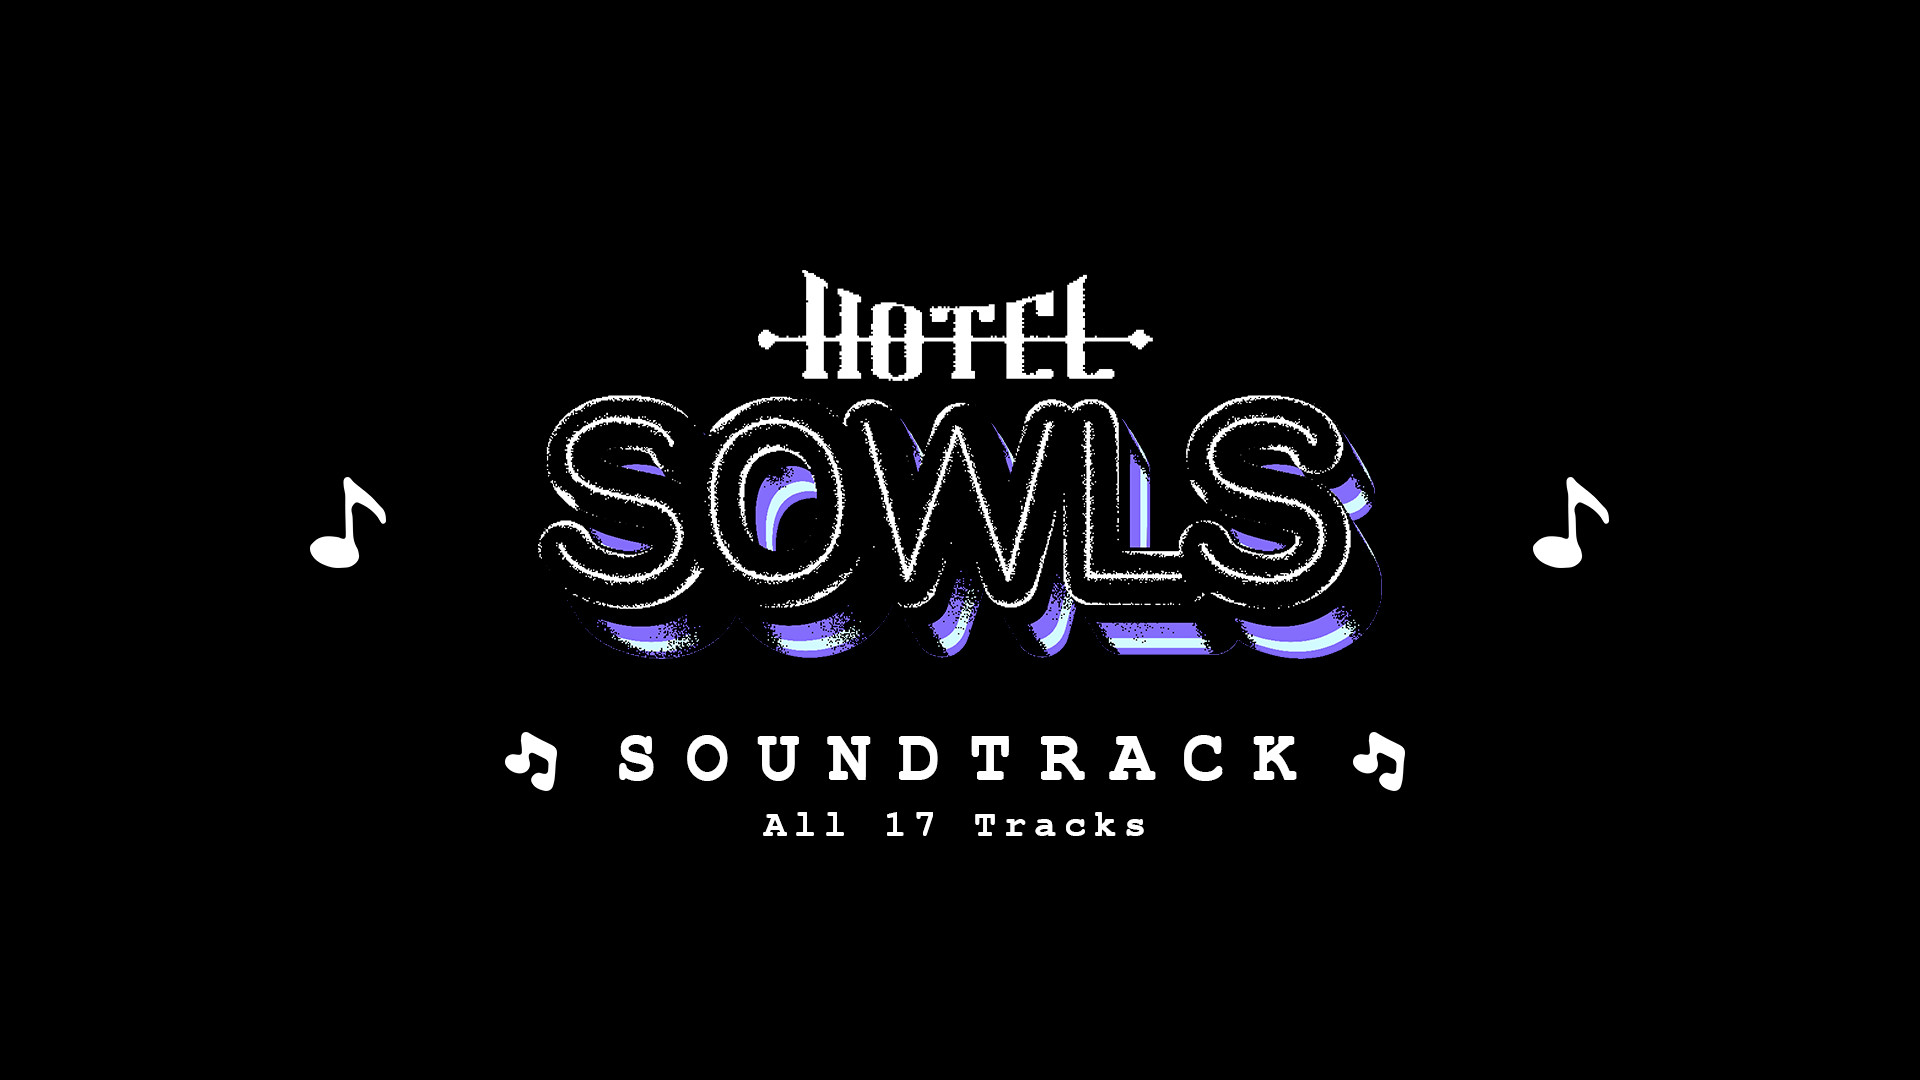 Hotel Sowls Soundtrack Featured Screenshot #1